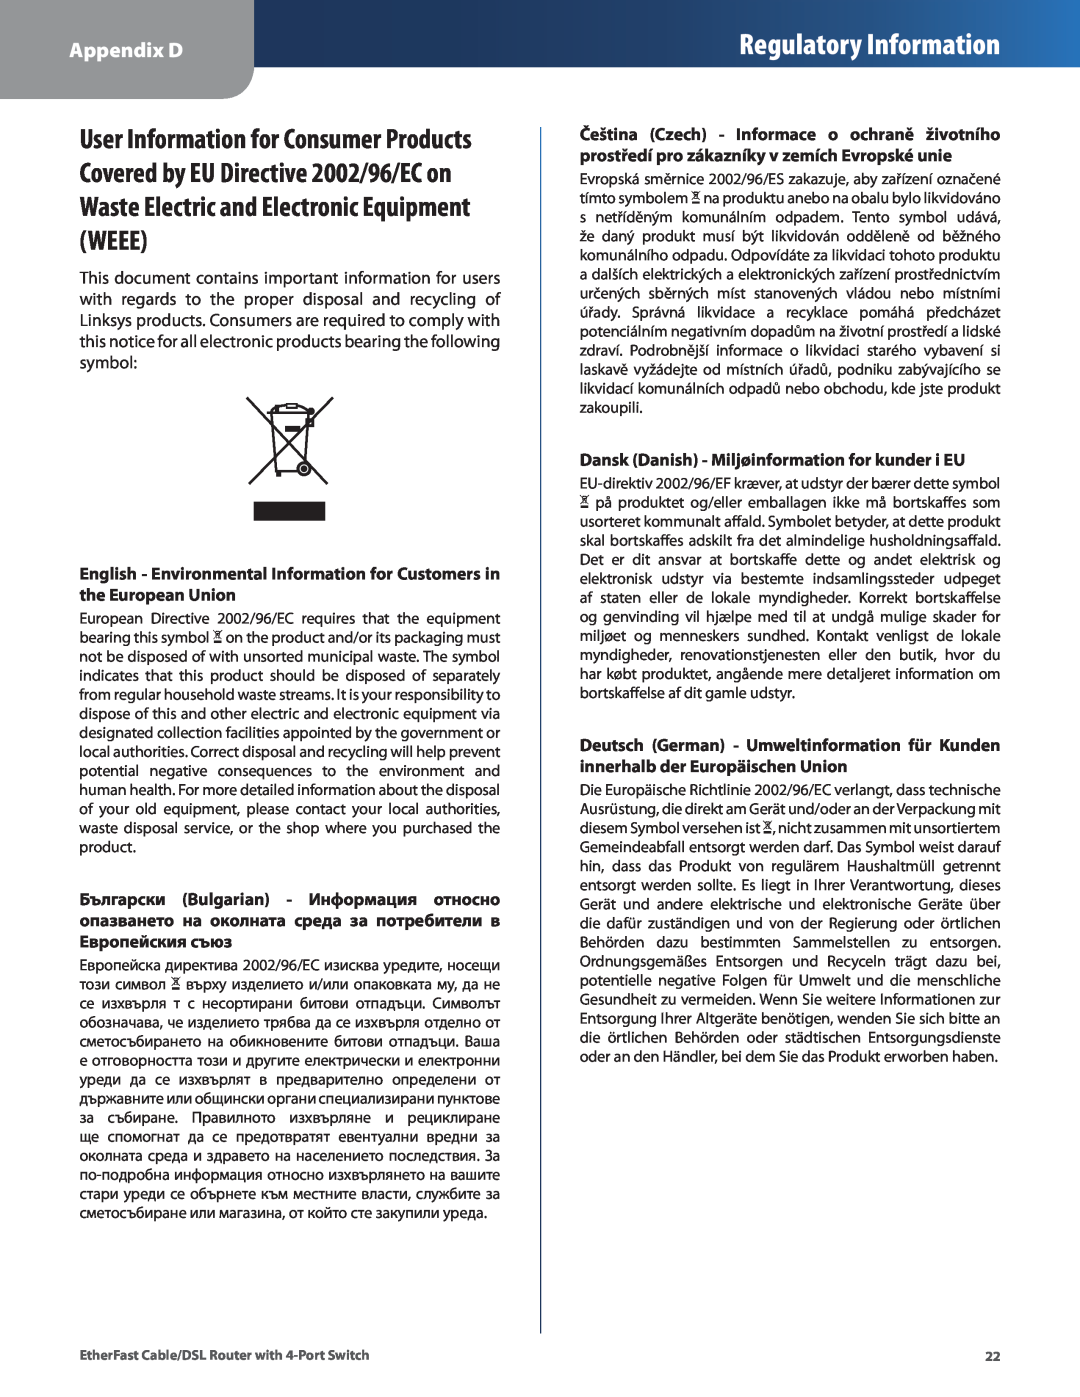 Honeywell HEMS II manual Regulatory Information, Appendix D, Dansk Danish - Miljøinformation for kunder i EU 